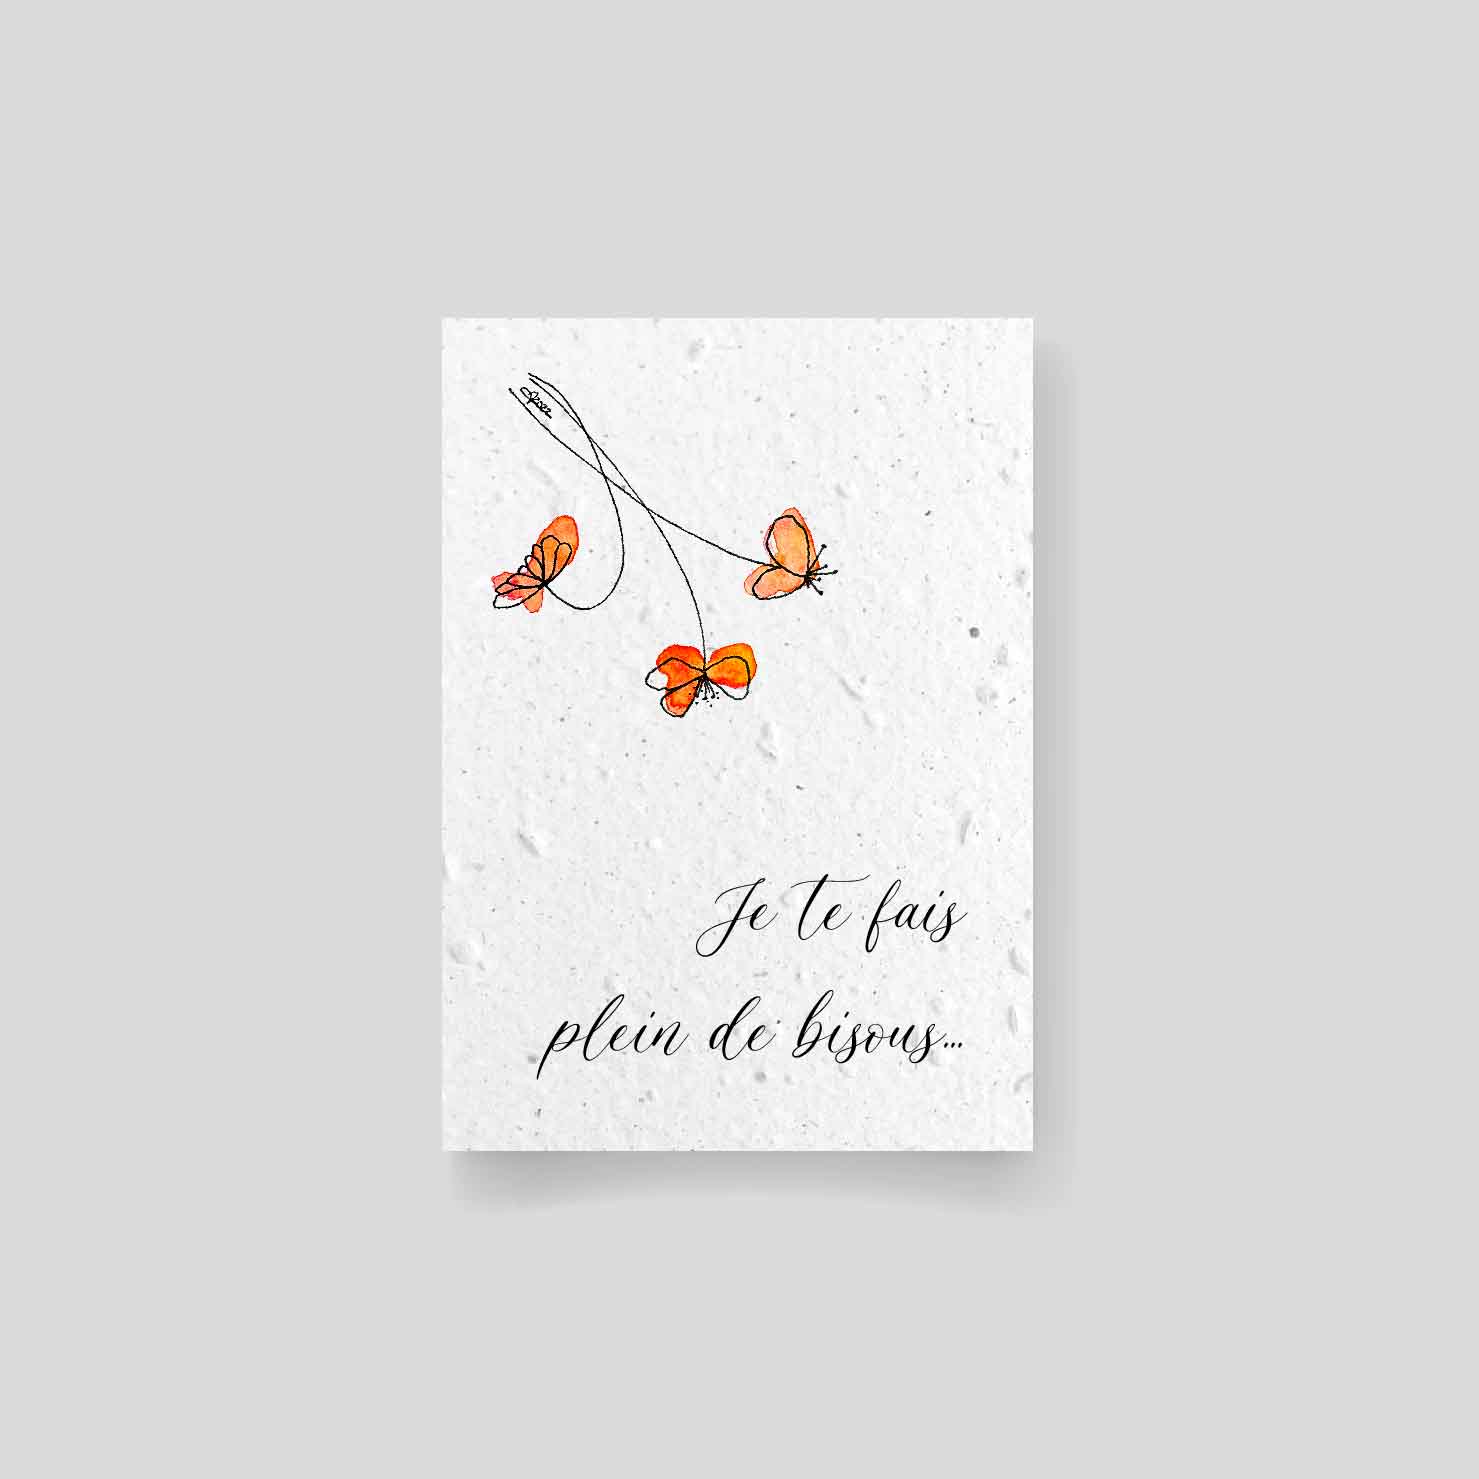 Planting card - "Plein de bisous" greeting card recto